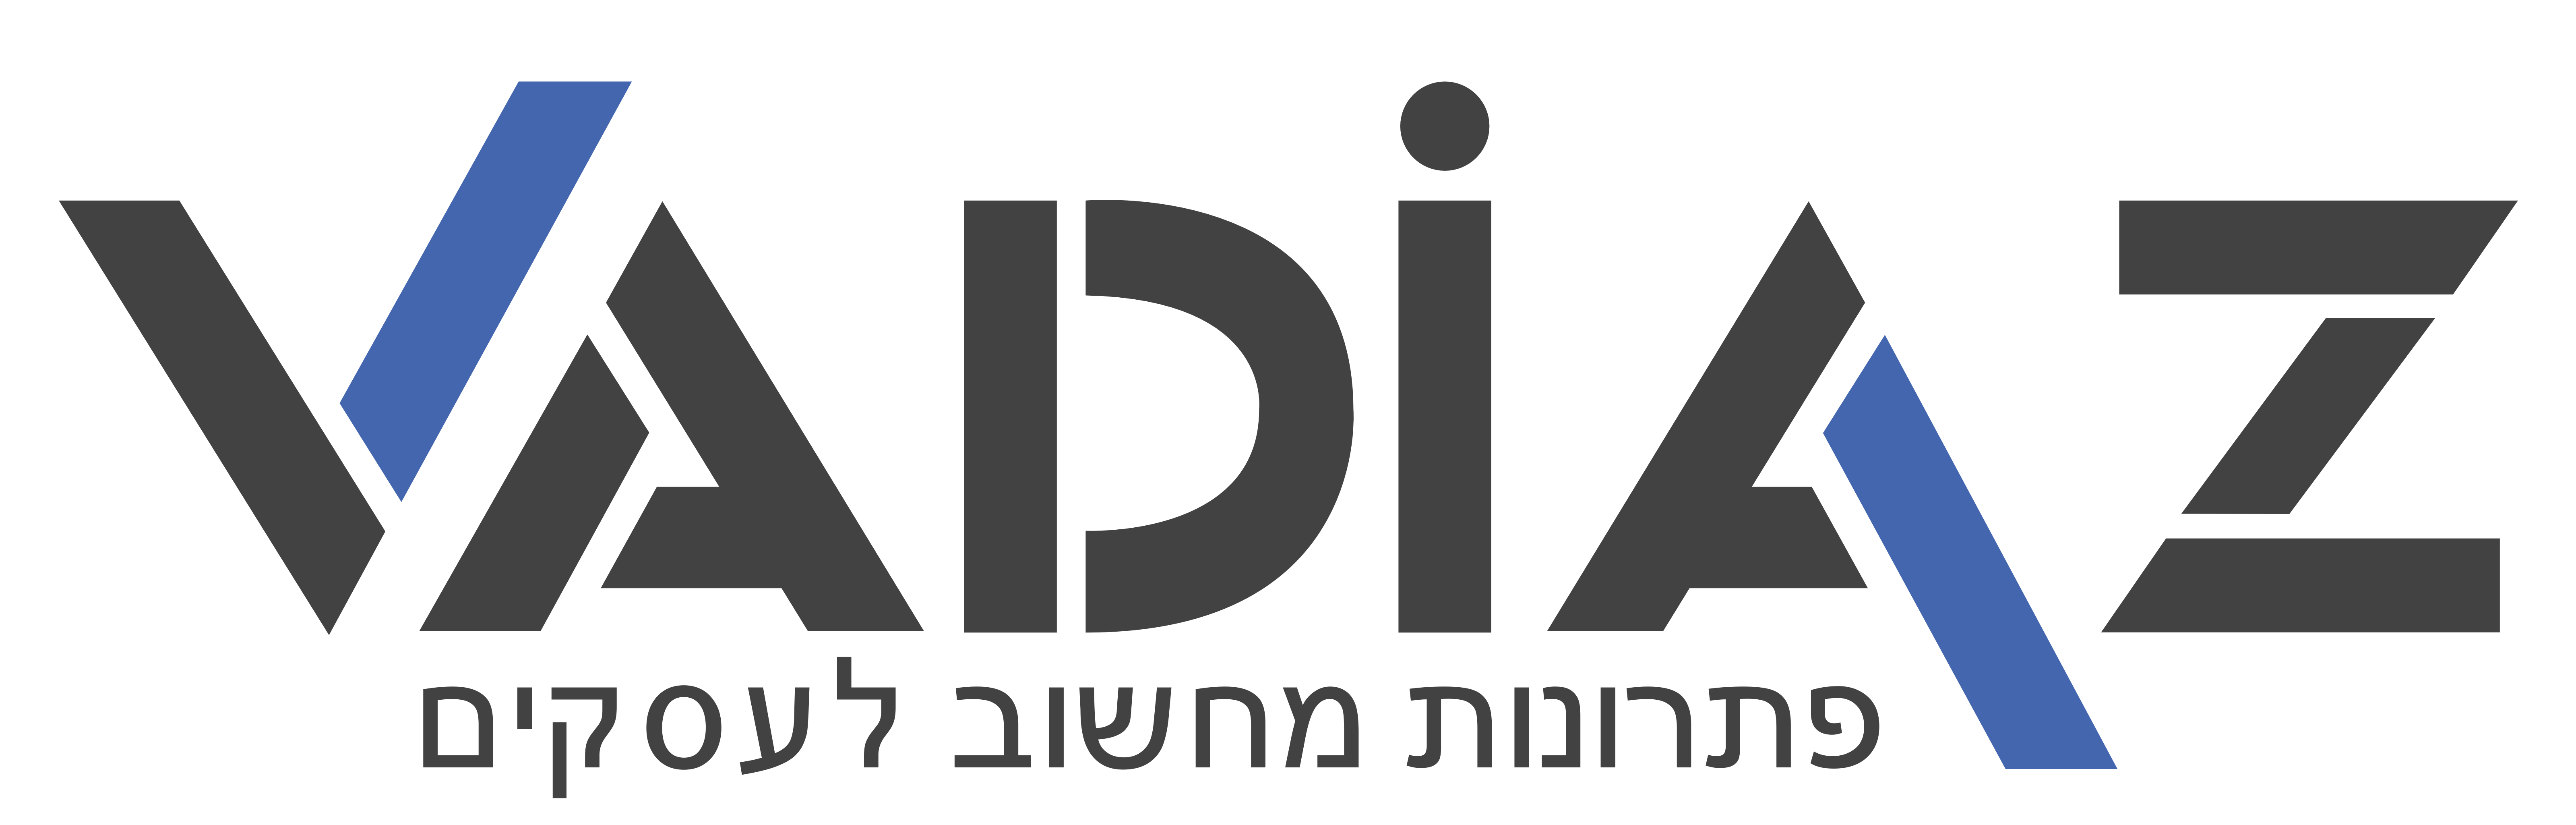 Vadiaz logo